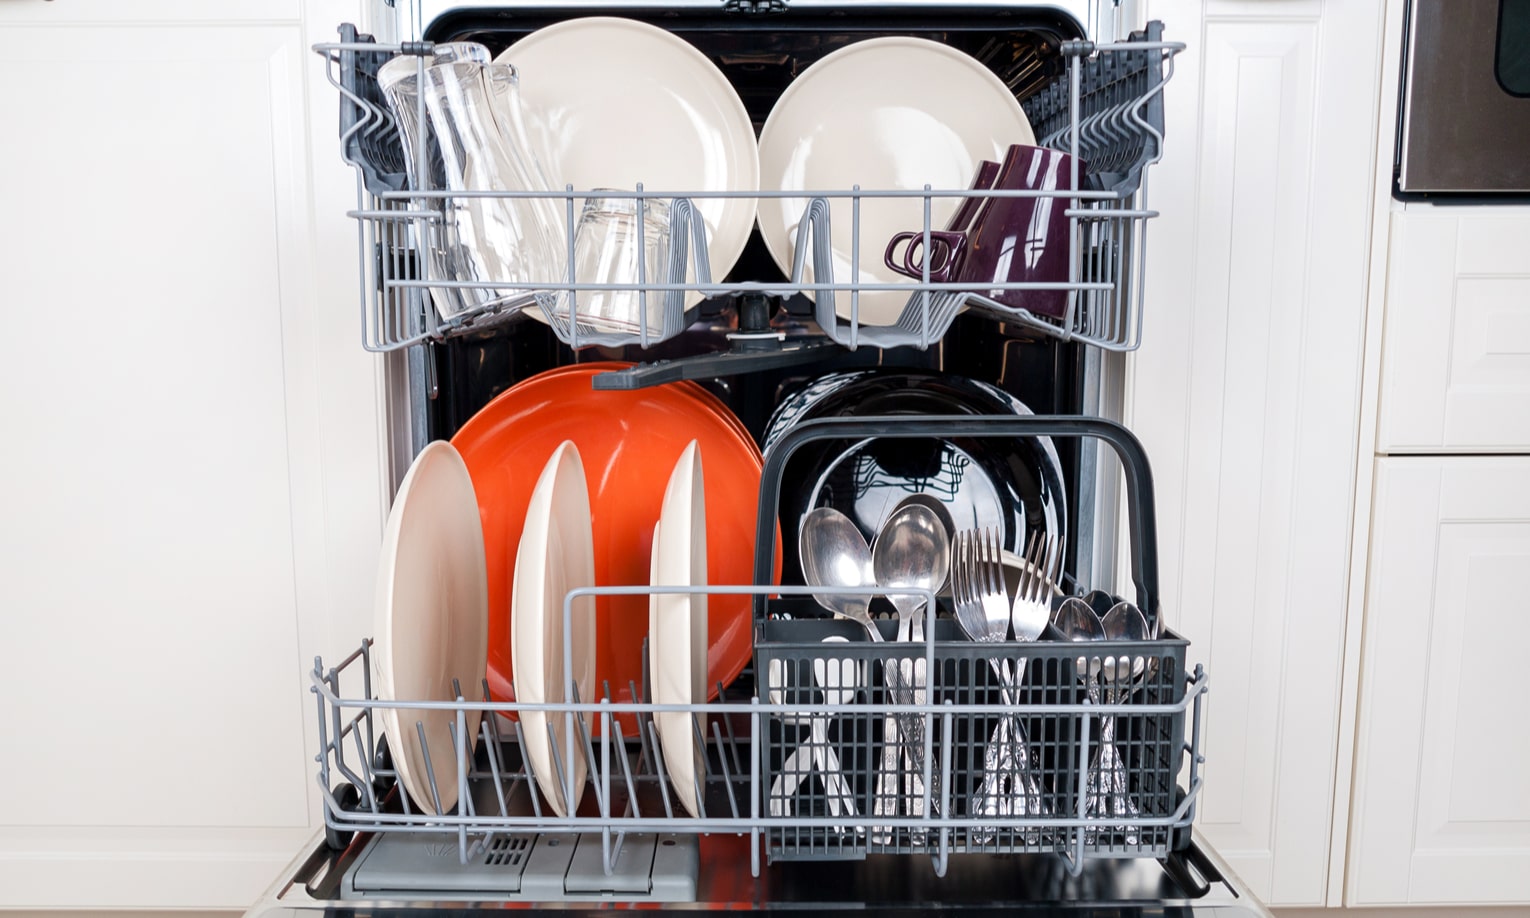 посуда сложена в посудомоечную машину